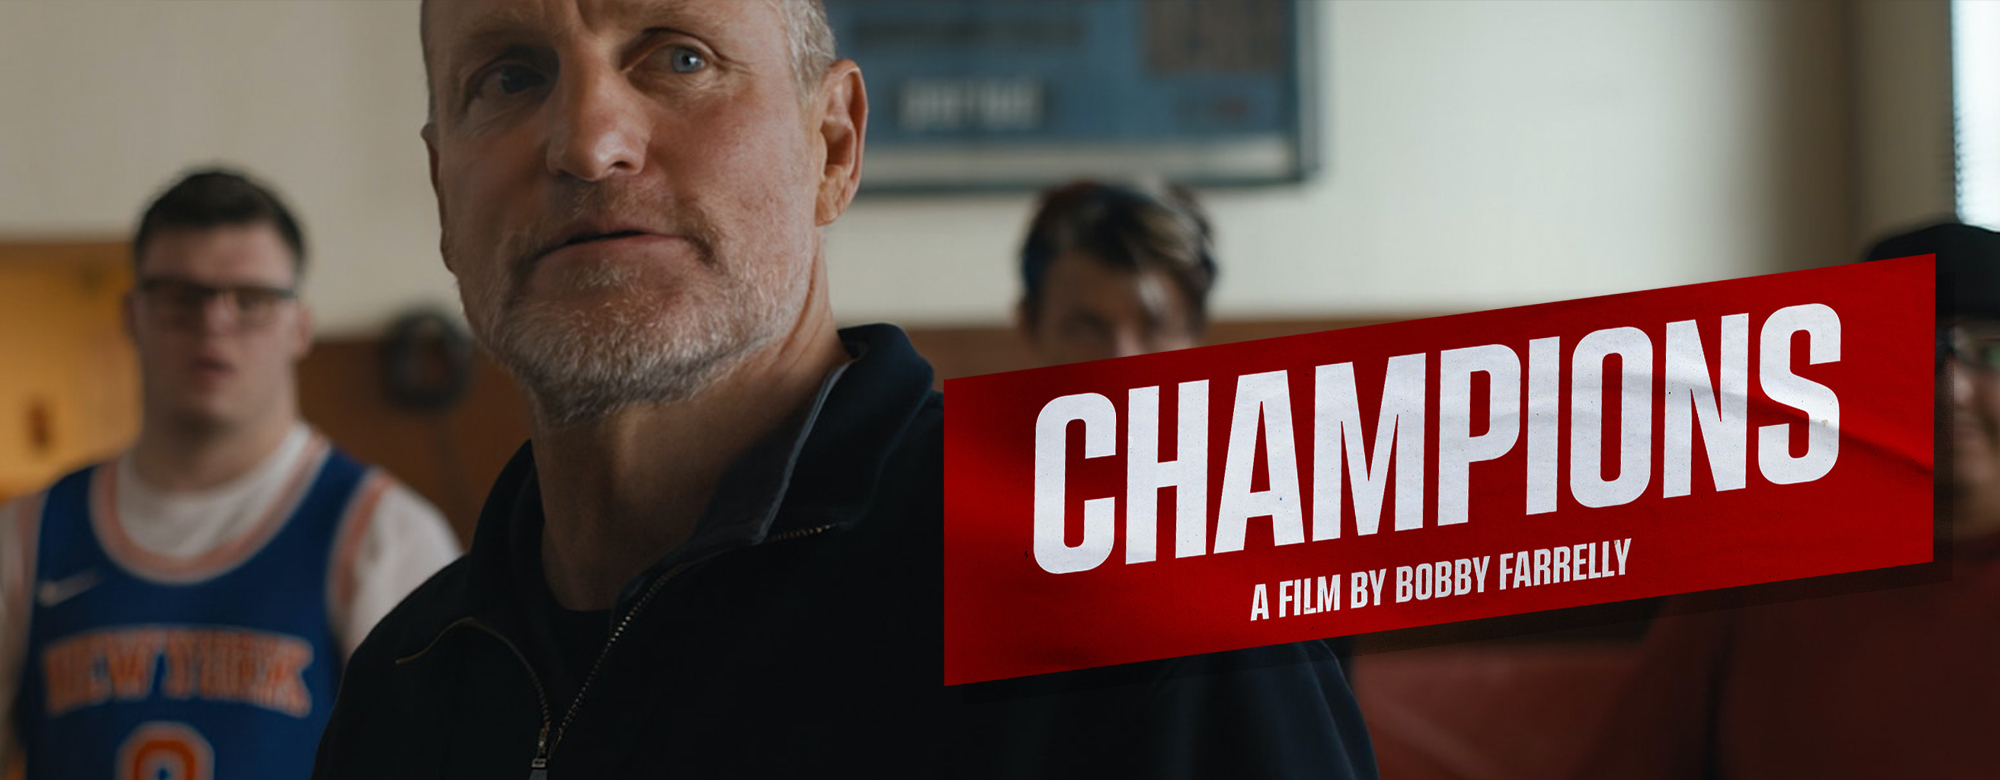 Champions Movie Header Image